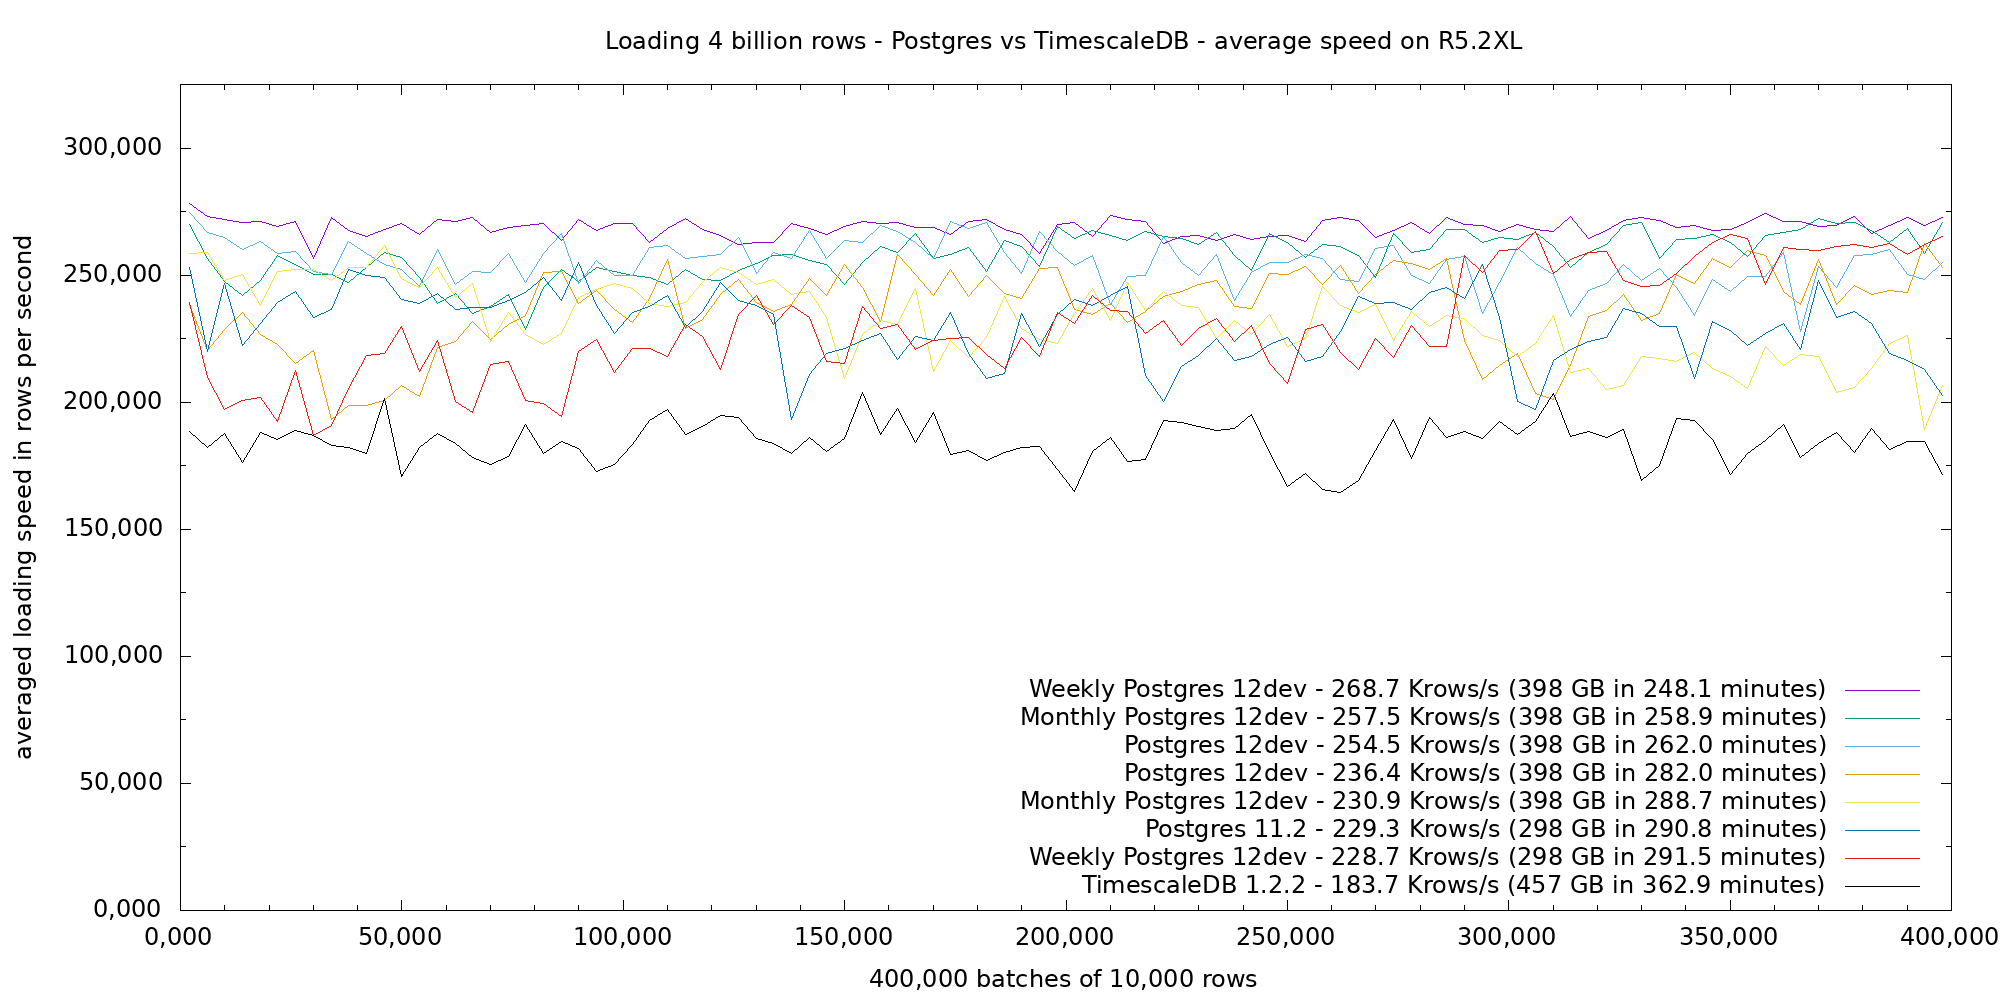 Postgres vs TimescaleDB average loading speed